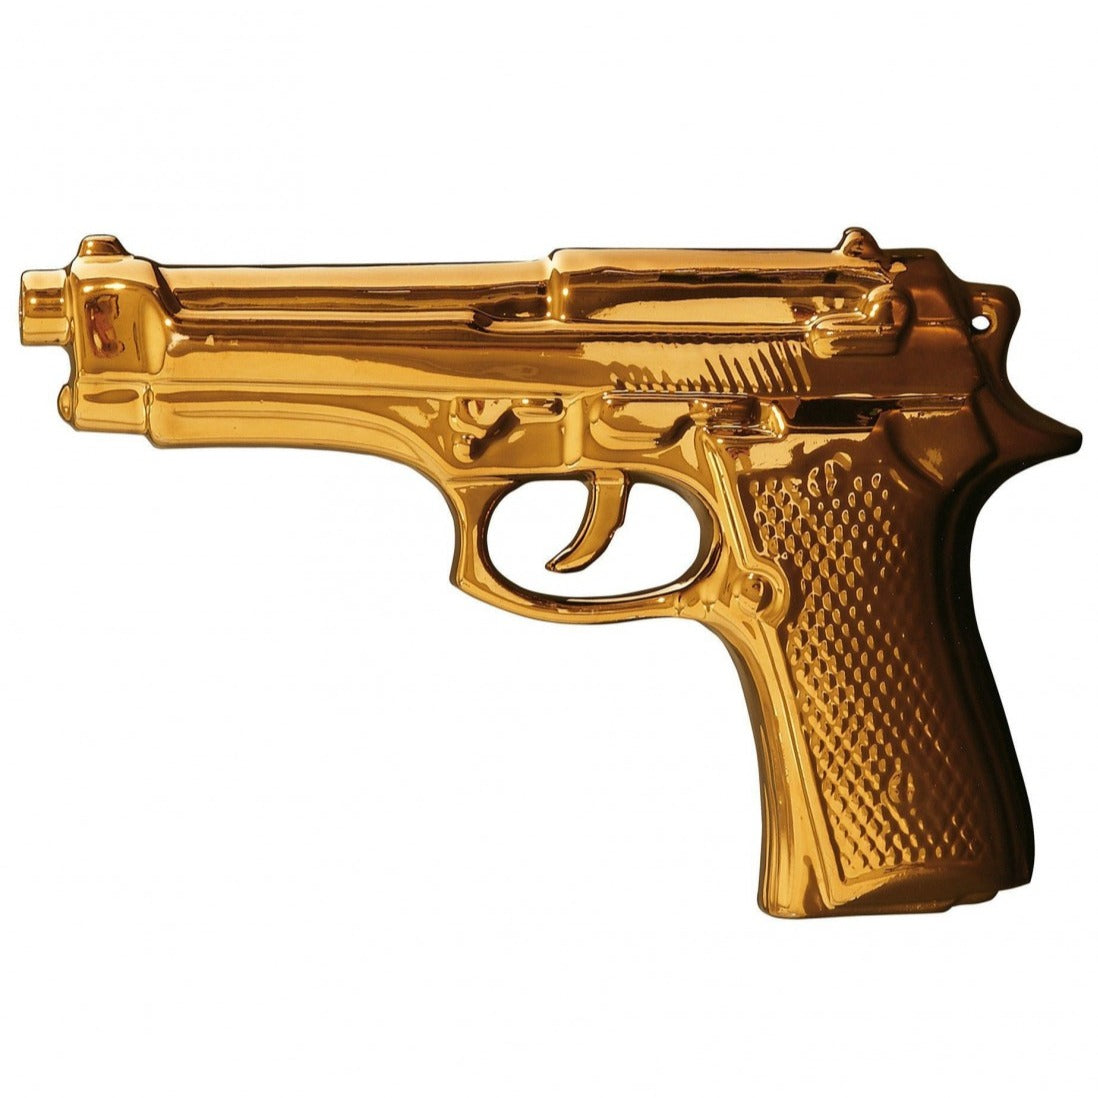 MEMORABILIA MY GUN gold decoration